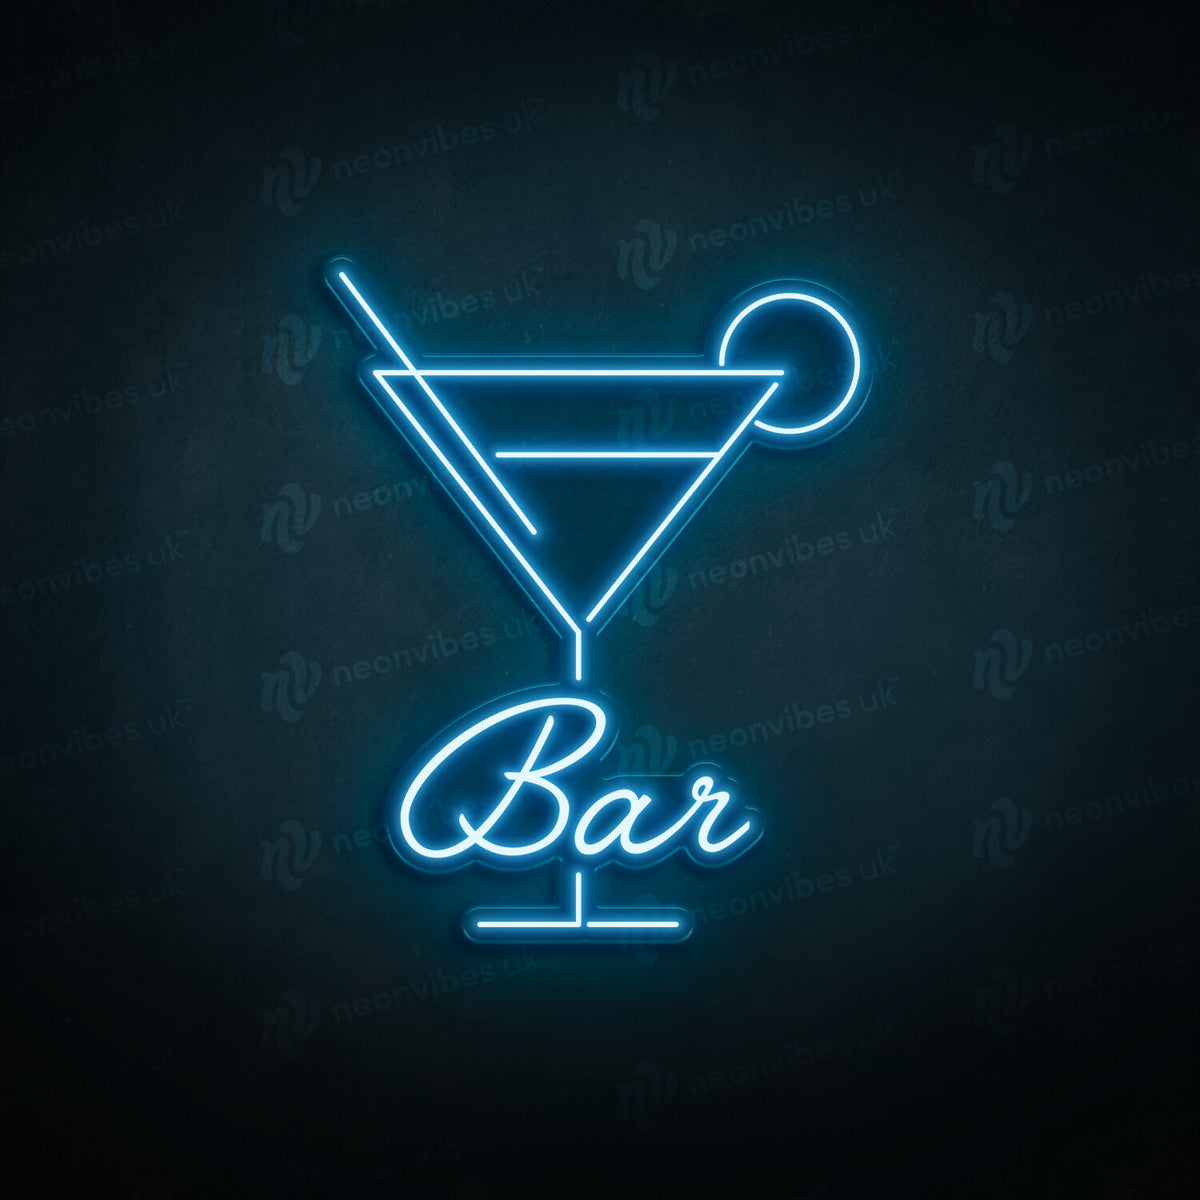 Cocktail Bar neon sign